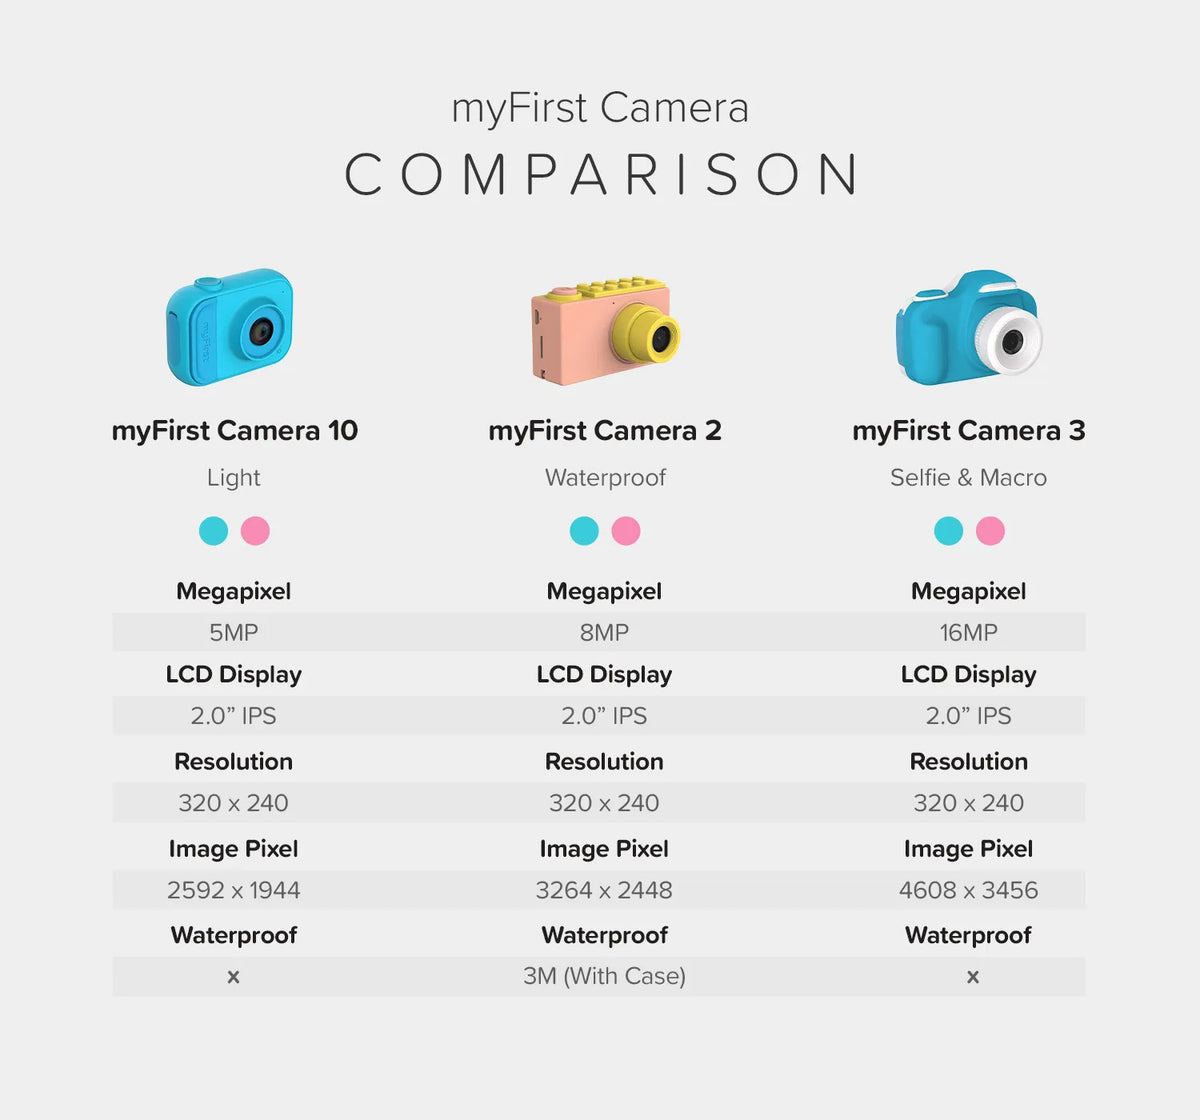 myFirst Camera 3 comparison